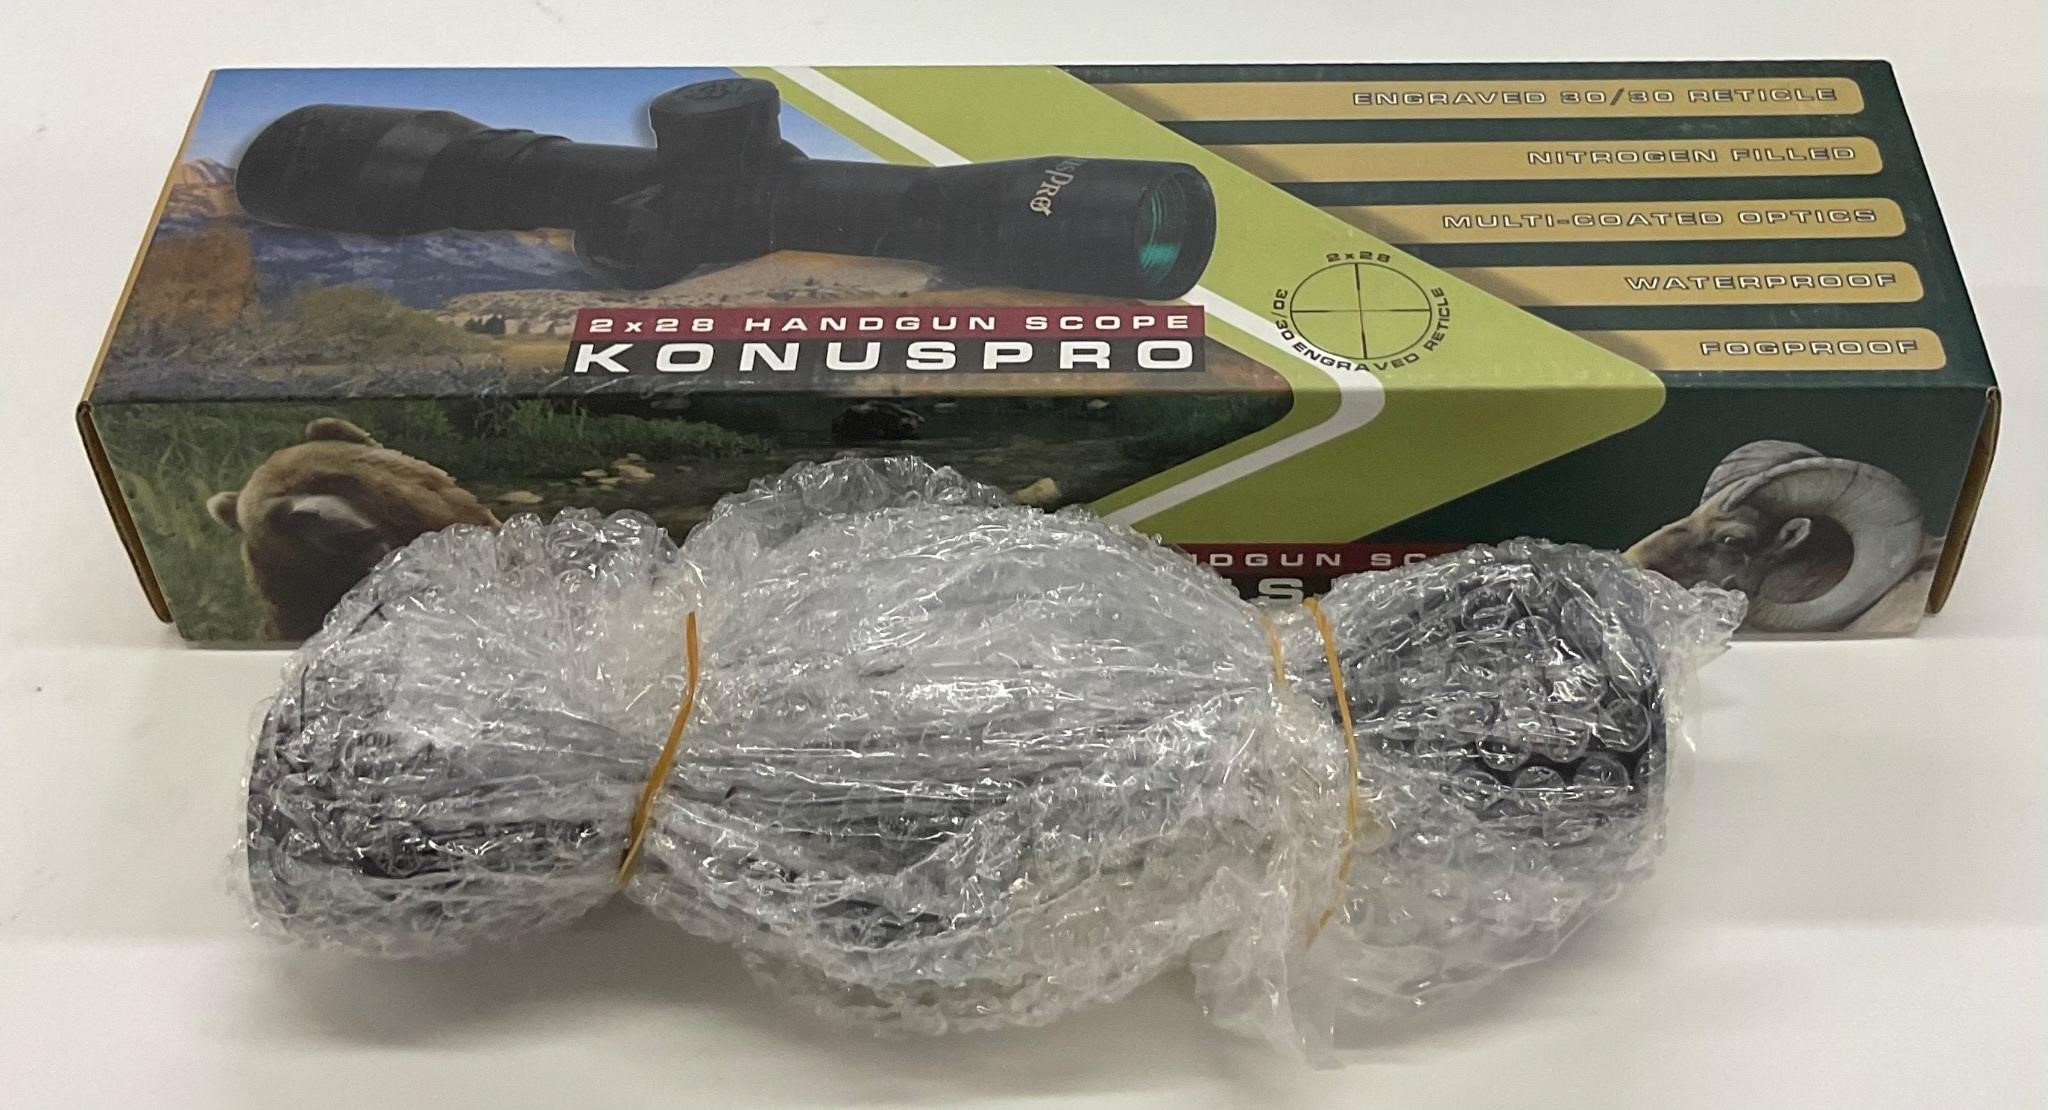 Konuspro 2x28 handgun scope